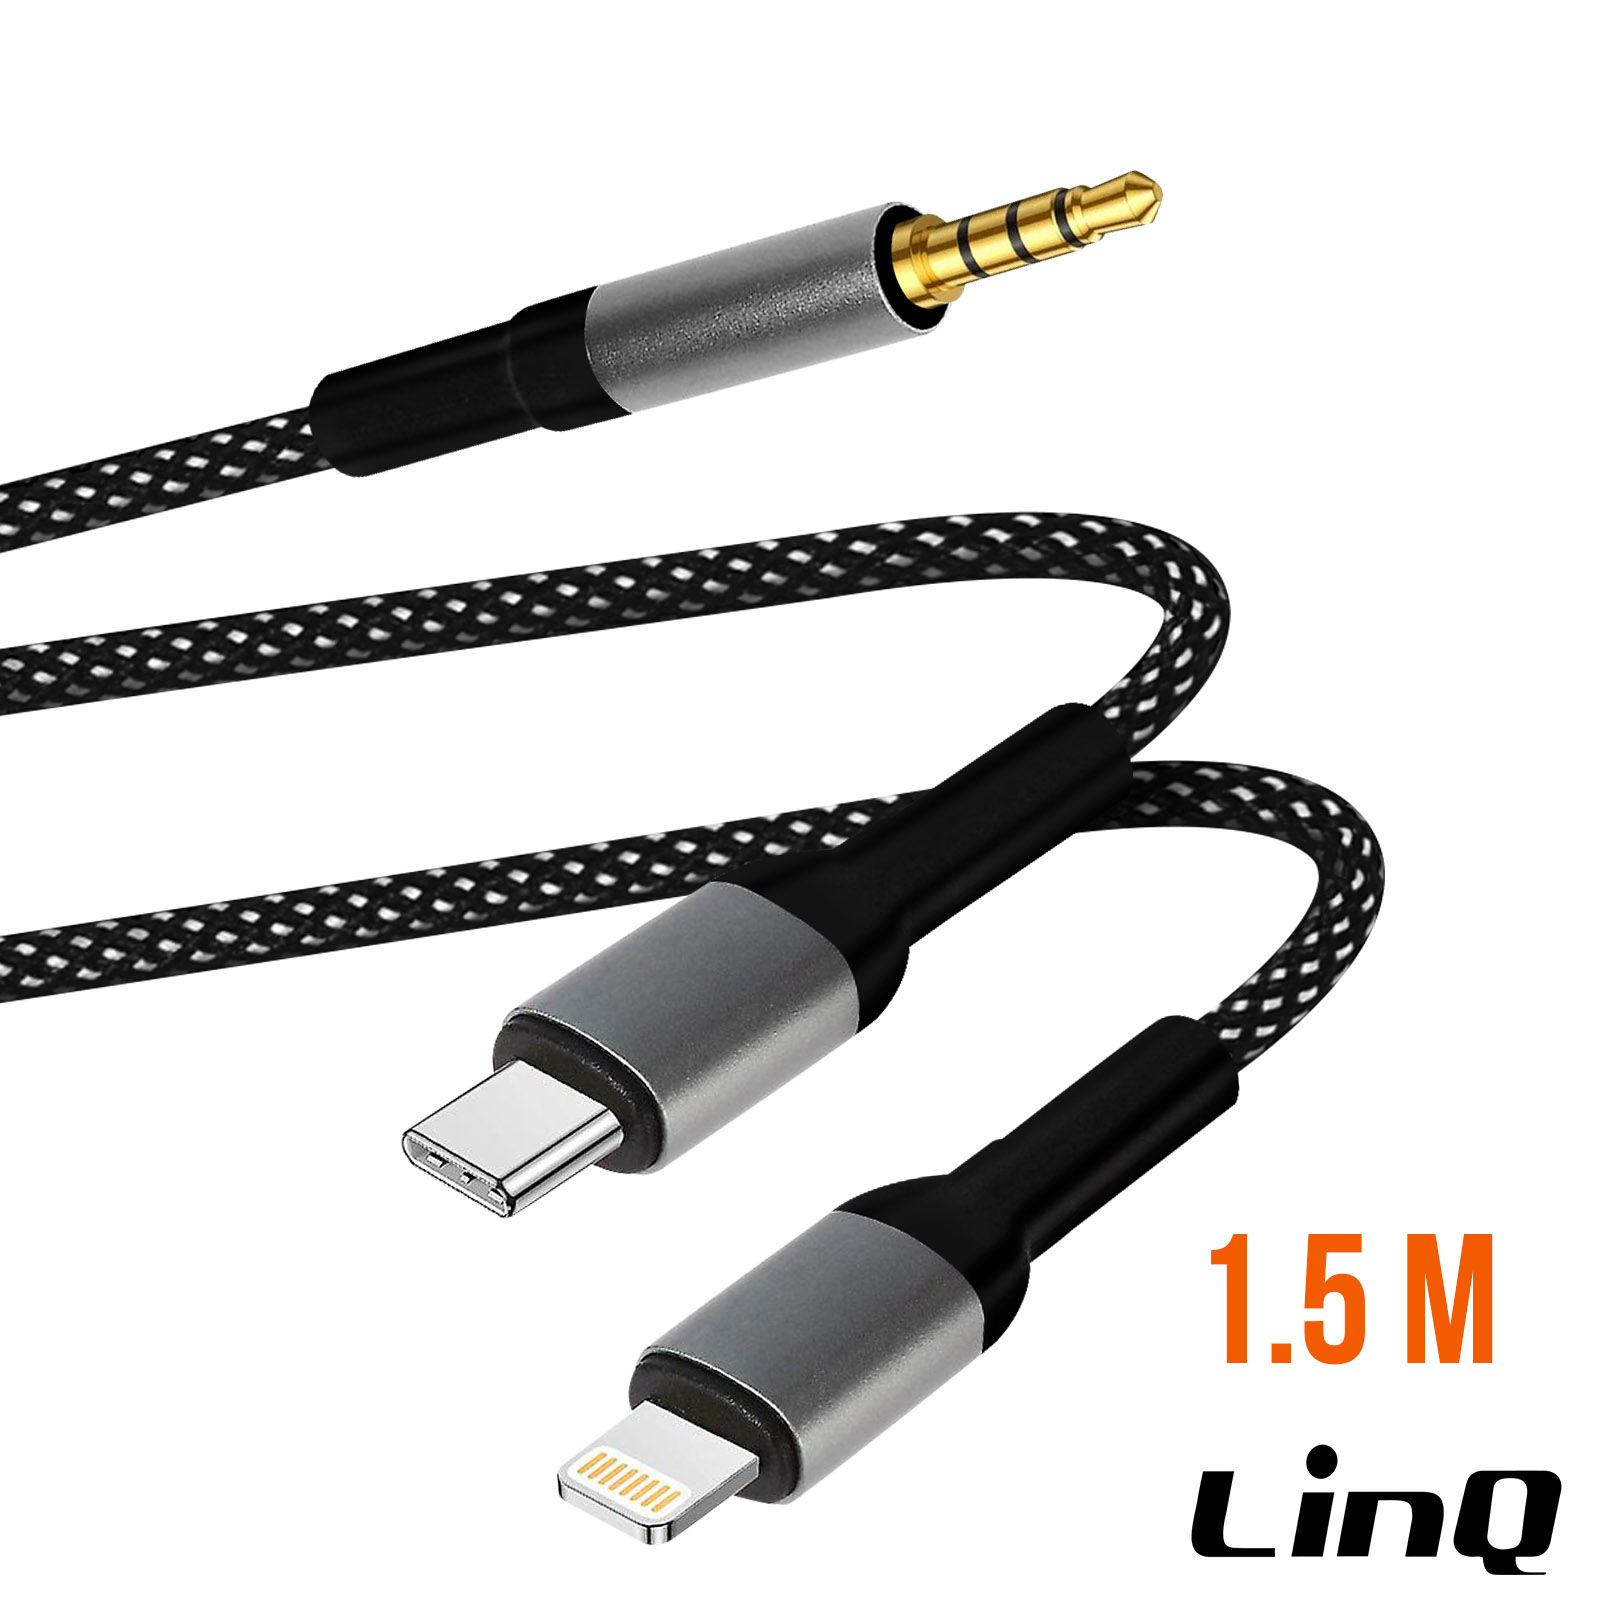 Cable adaptador para iPhone y iPad: USB-C + Lightning a Jack 3,5